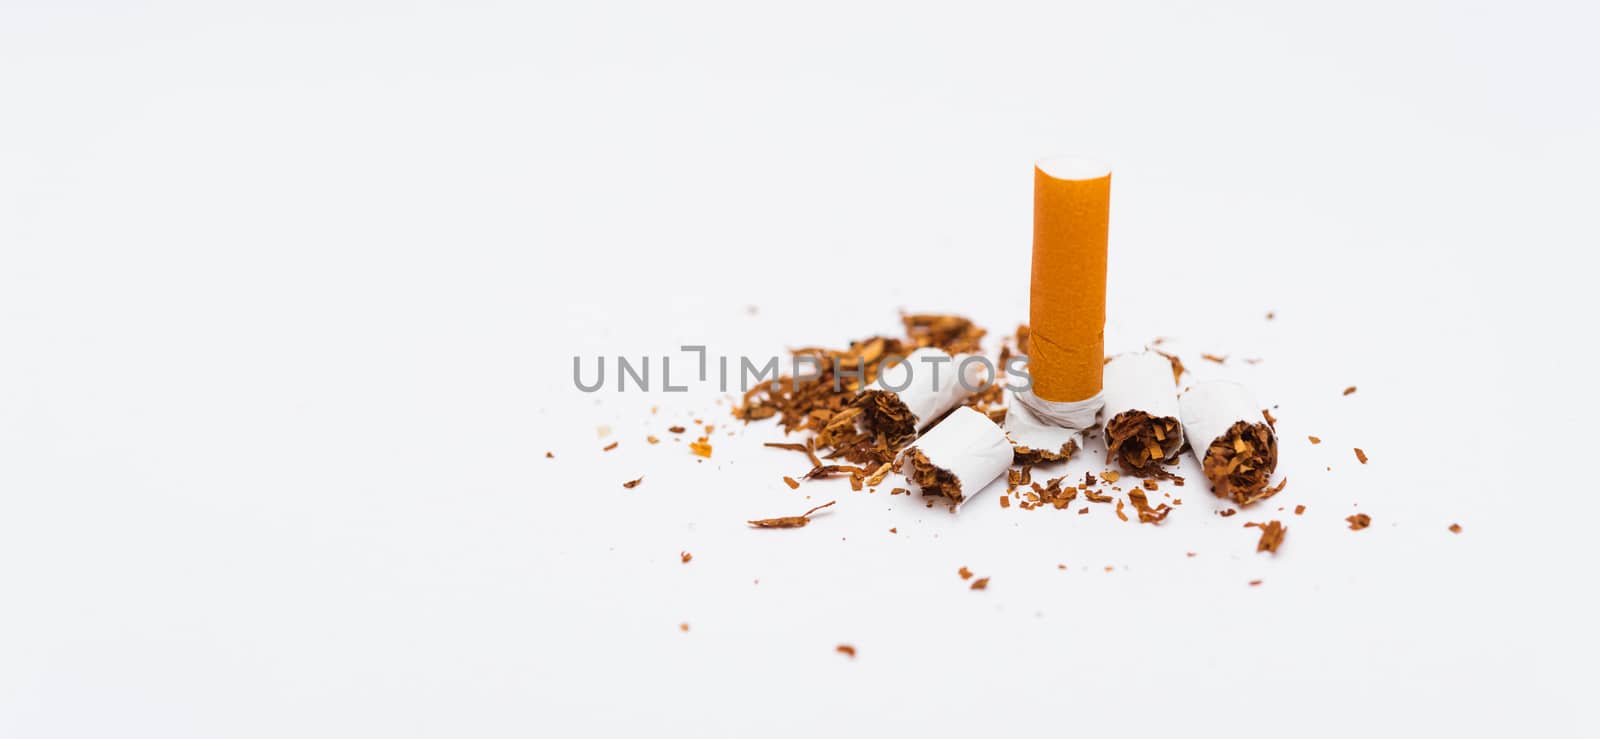 Pin down broken pile cigarette or tobacco on white background by Sorapop